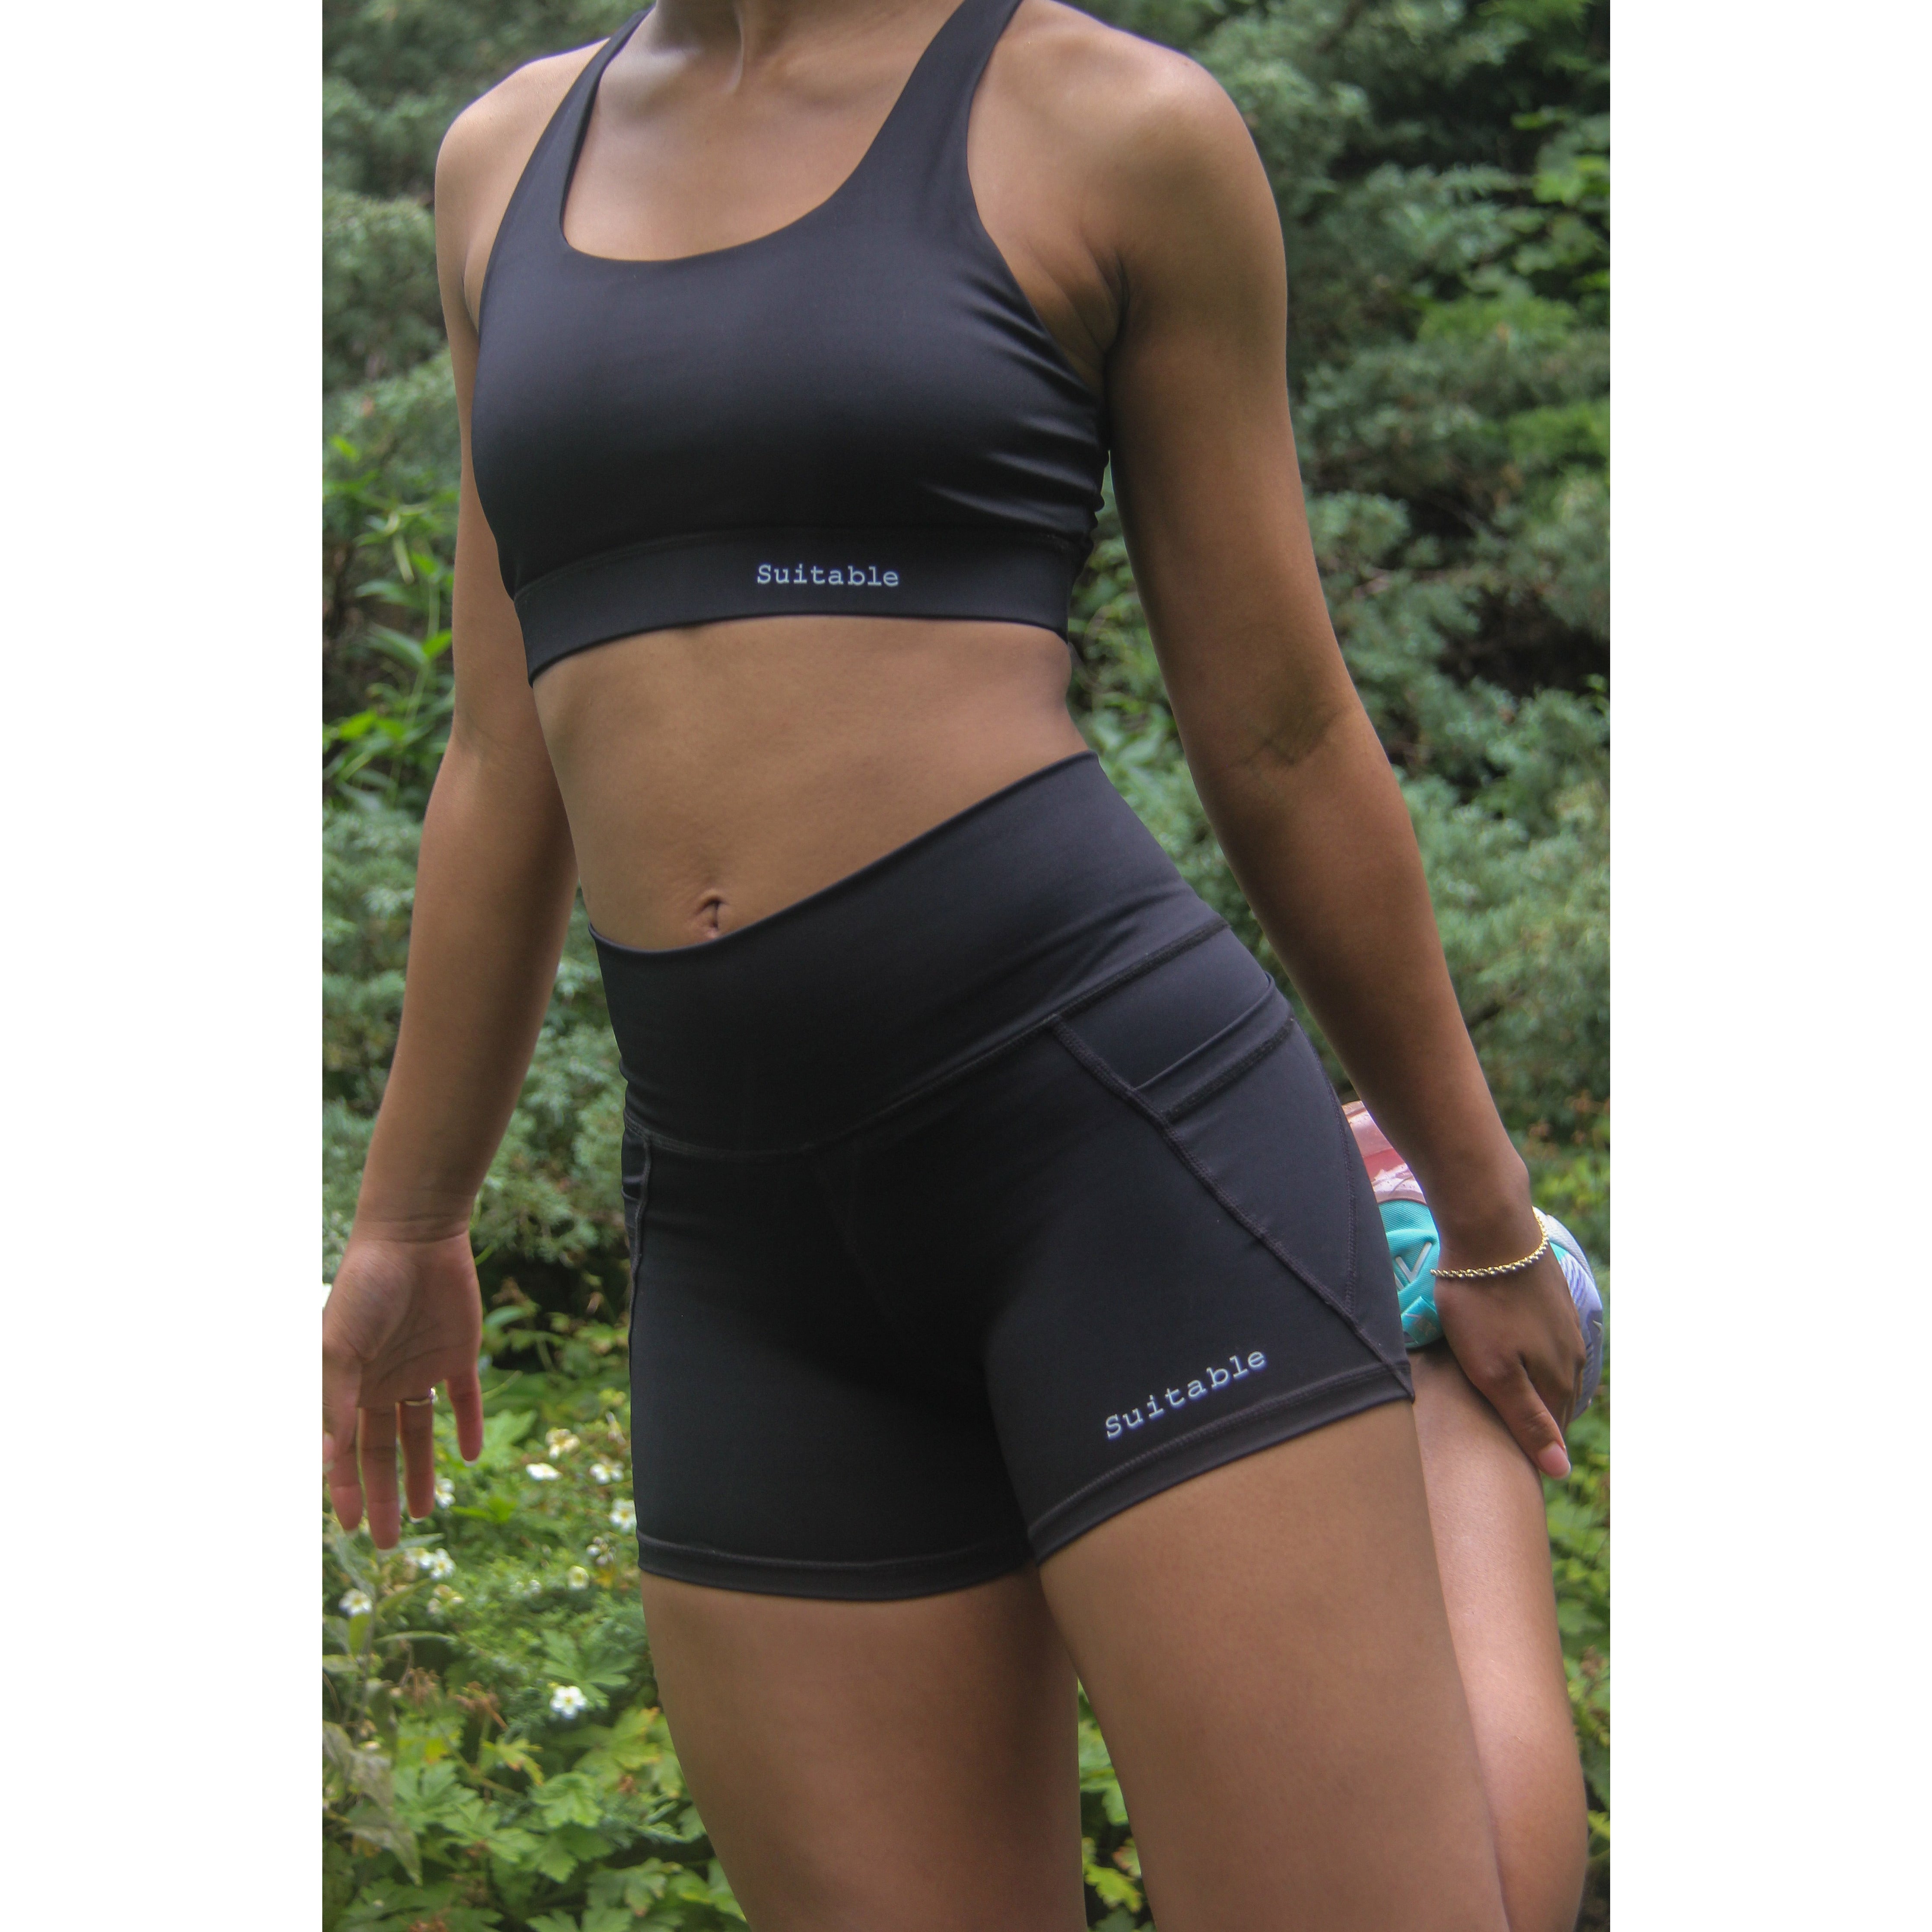 Adult Black Sports bra and shorts set